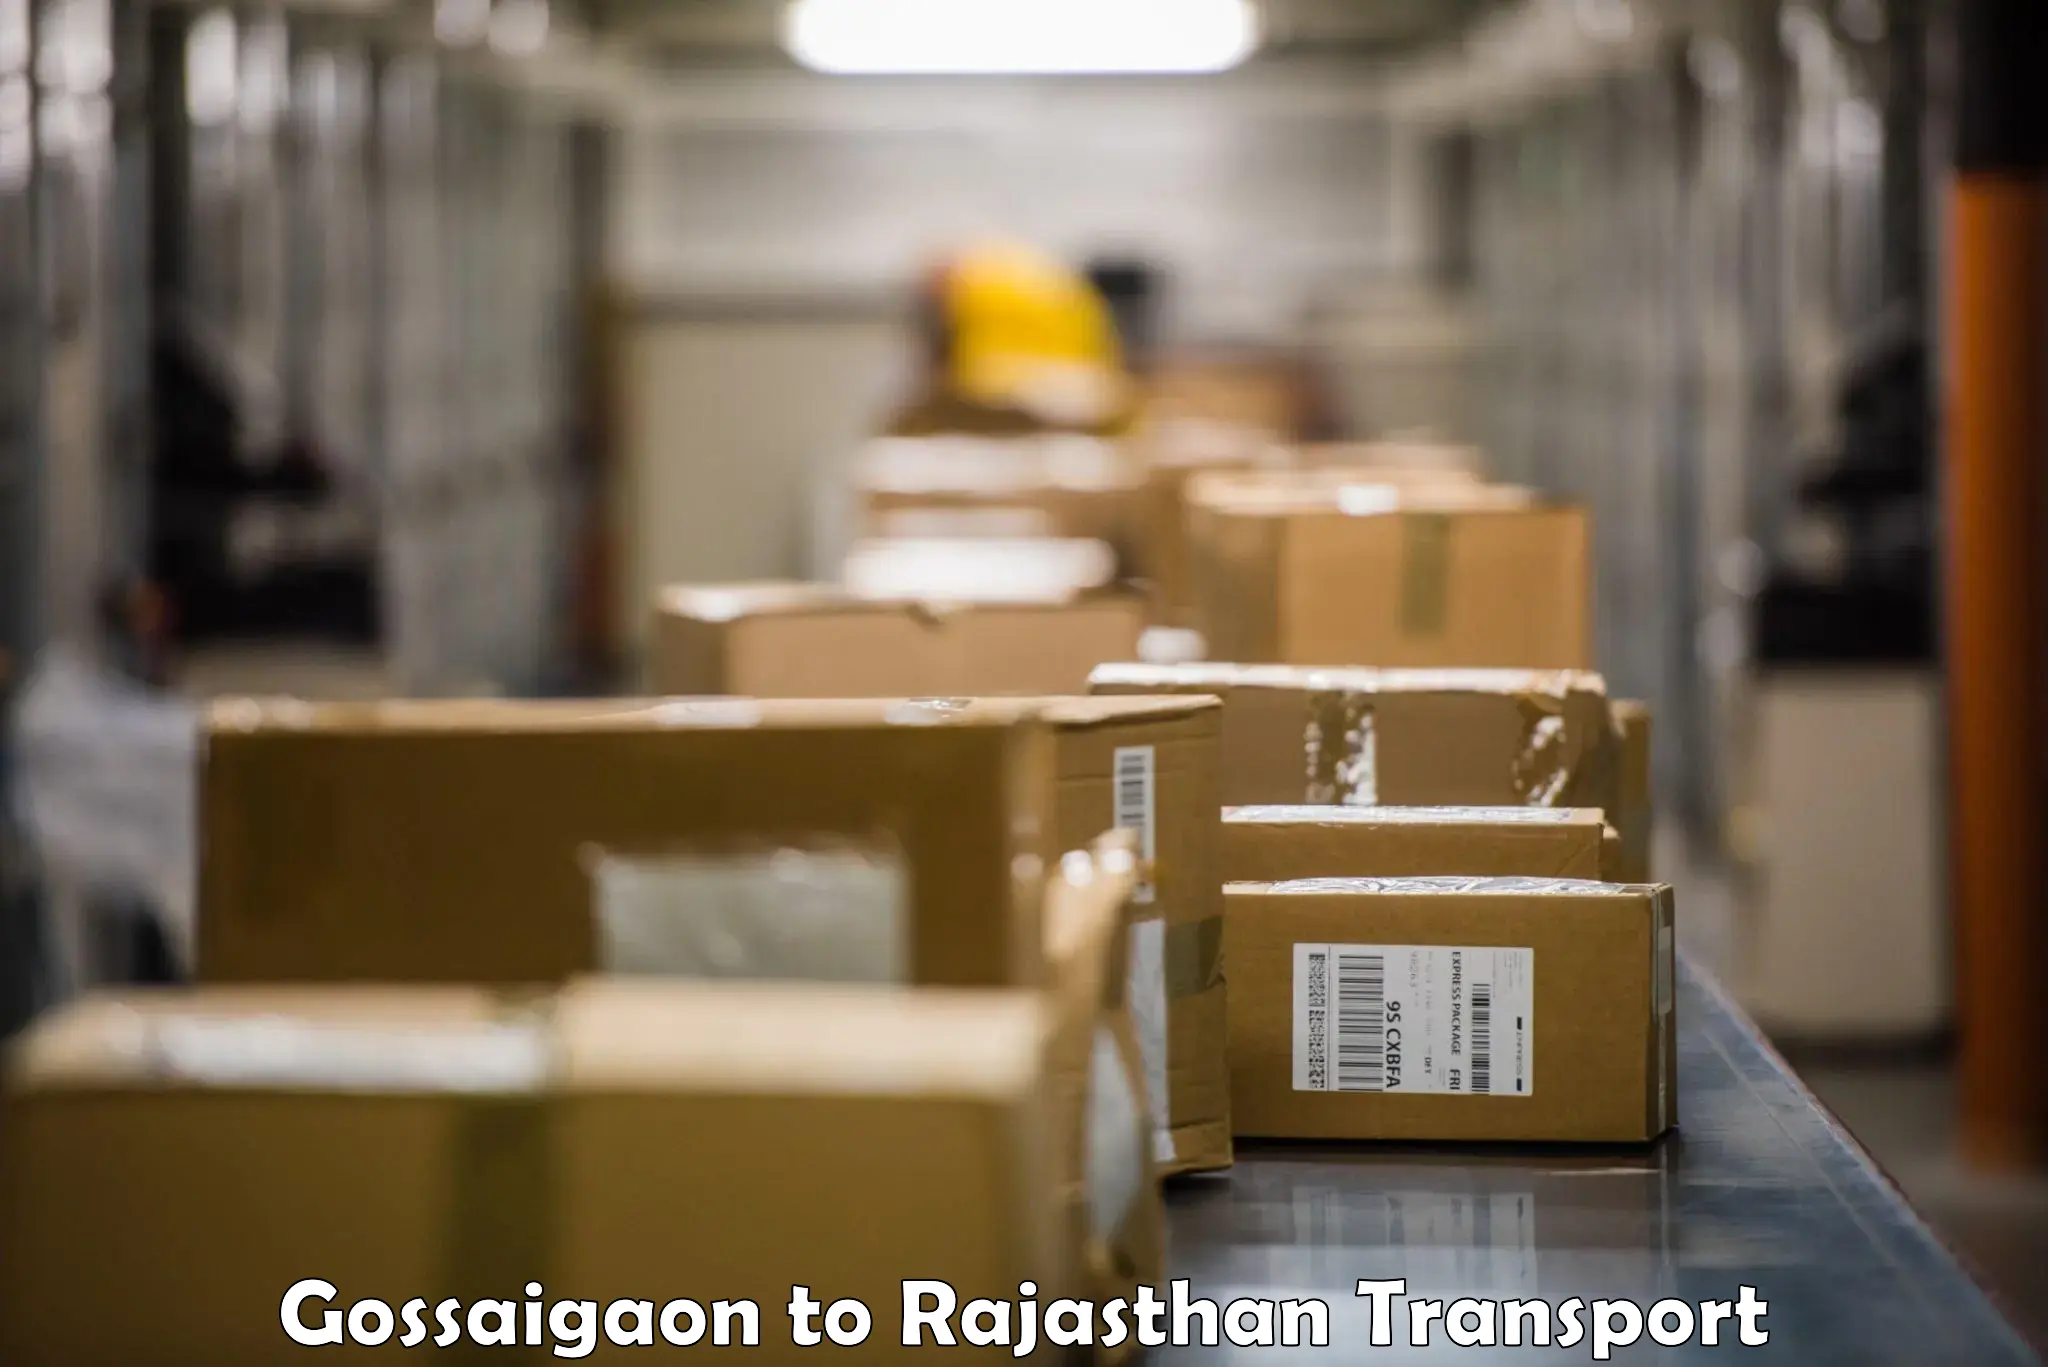 Truck transport companies in India Gossaigaon to Gogunda